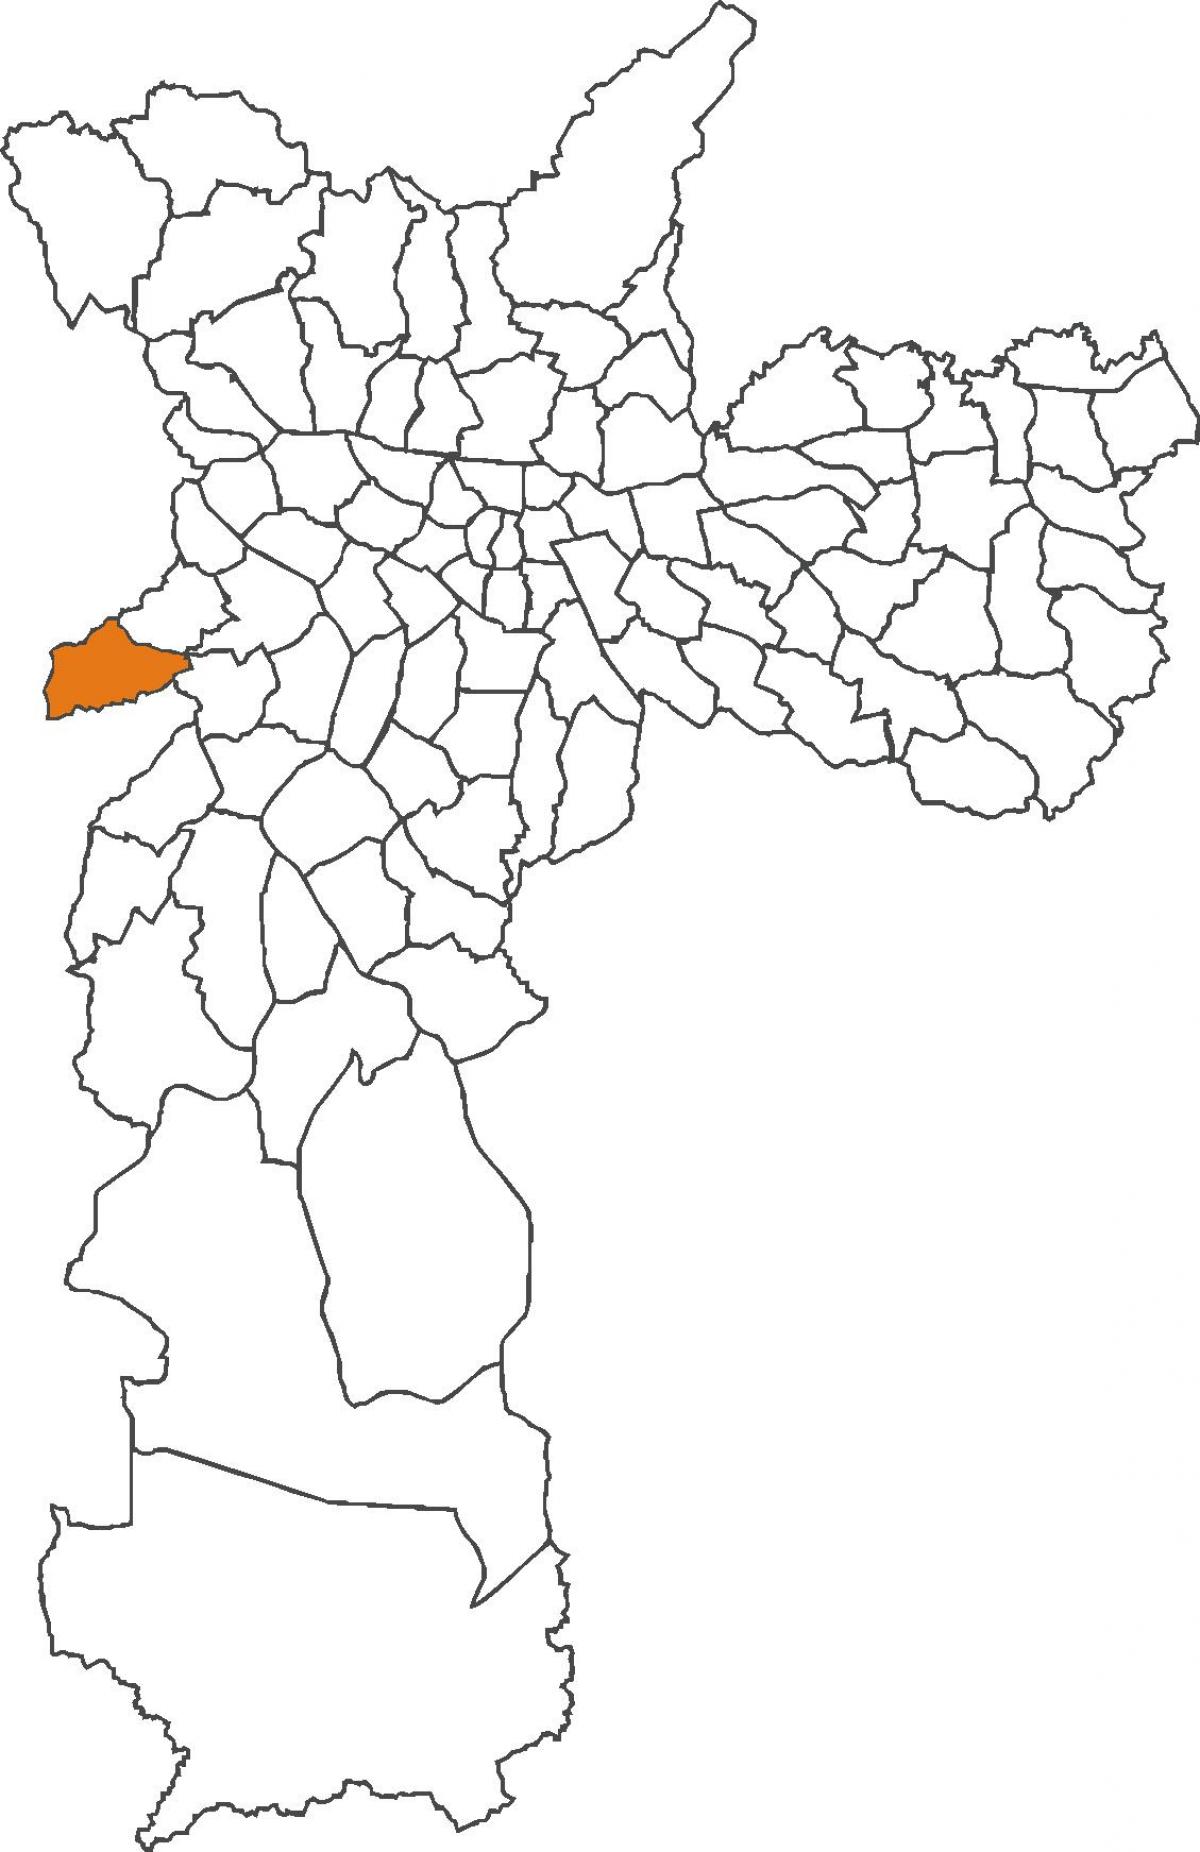 Karte von Raposo Tavares Bezirk